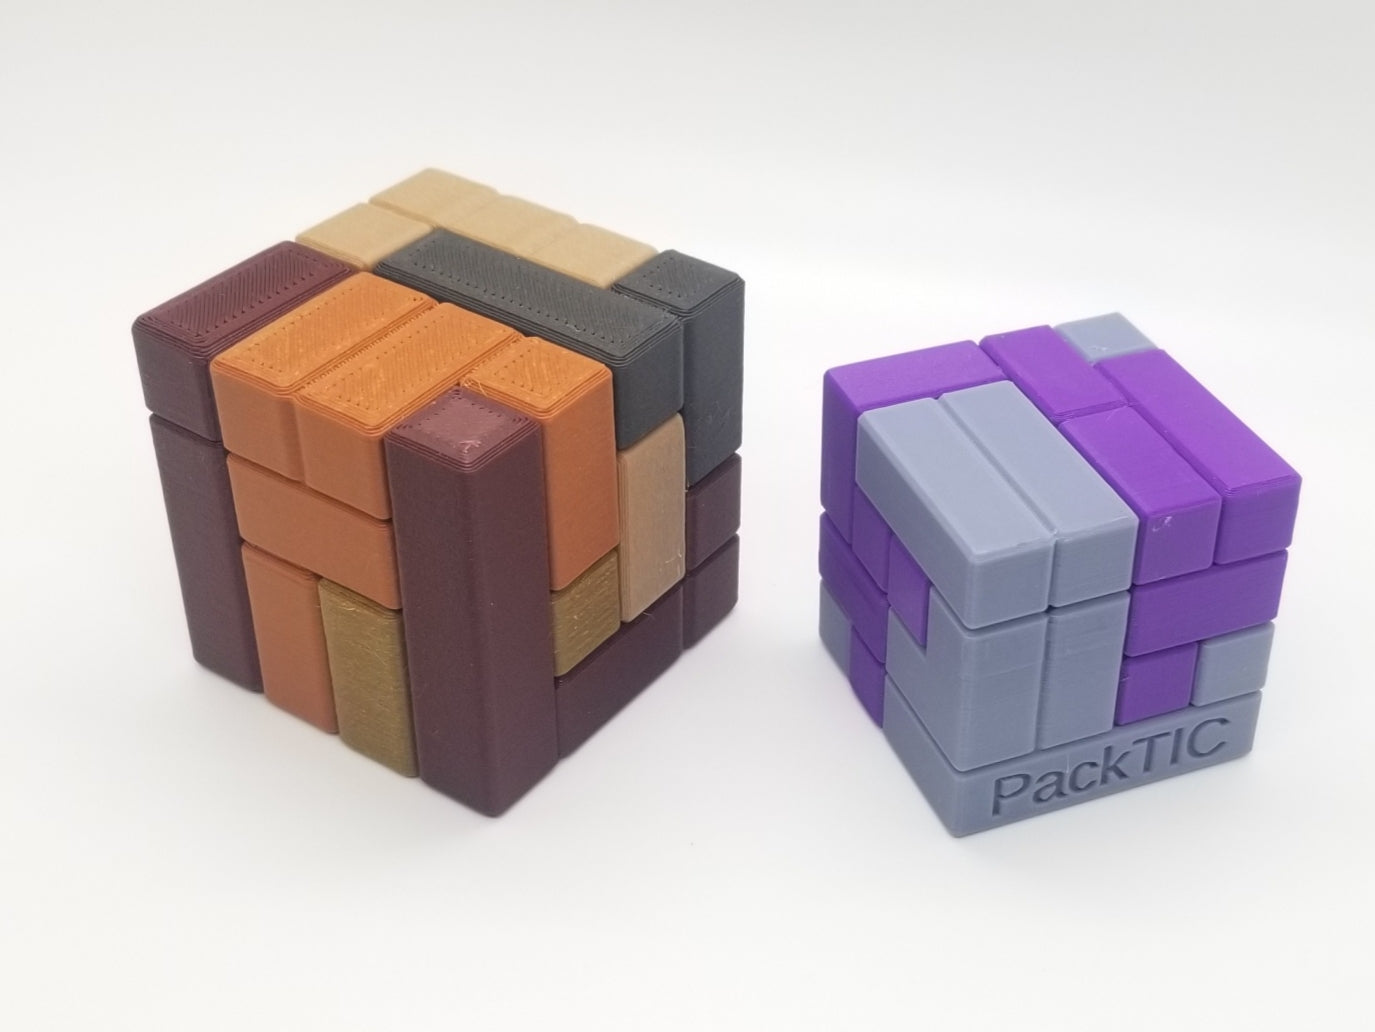 RAFTIC - 3D Printed Wood Filament Puzzle